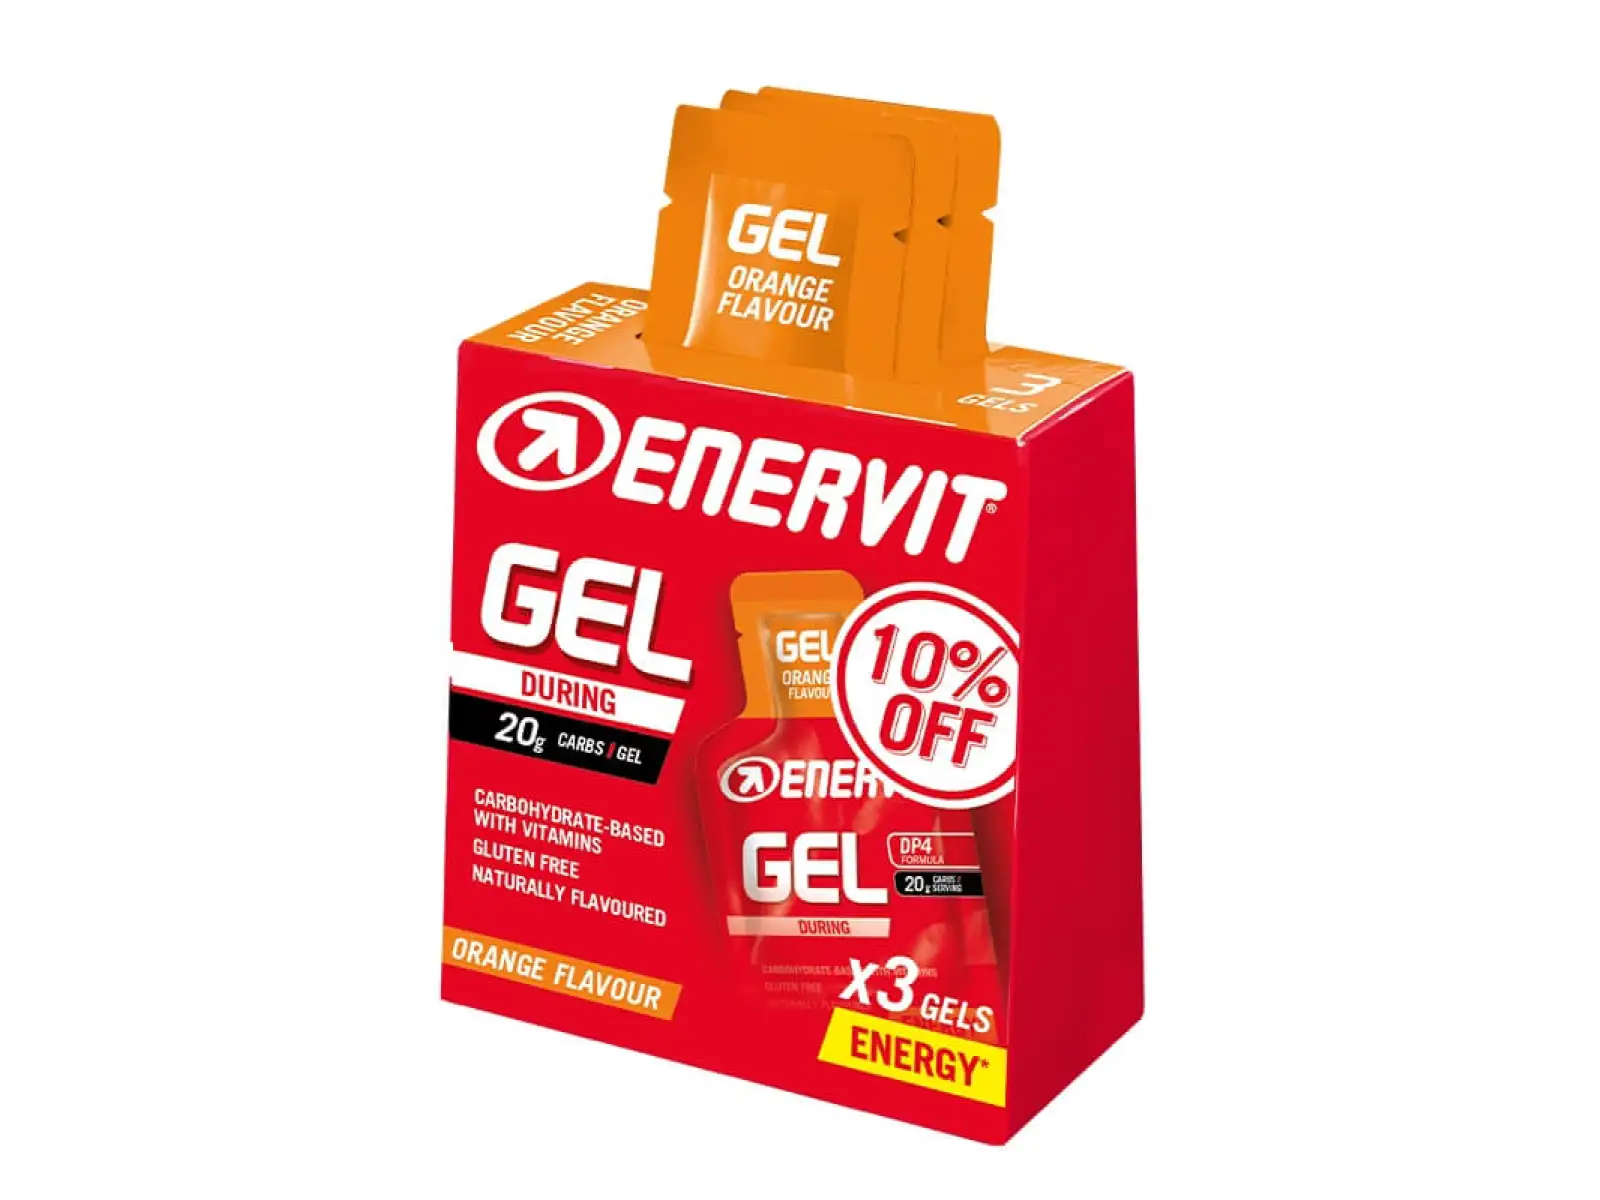 Enervit Sport Gel box 3x25ml oranžový